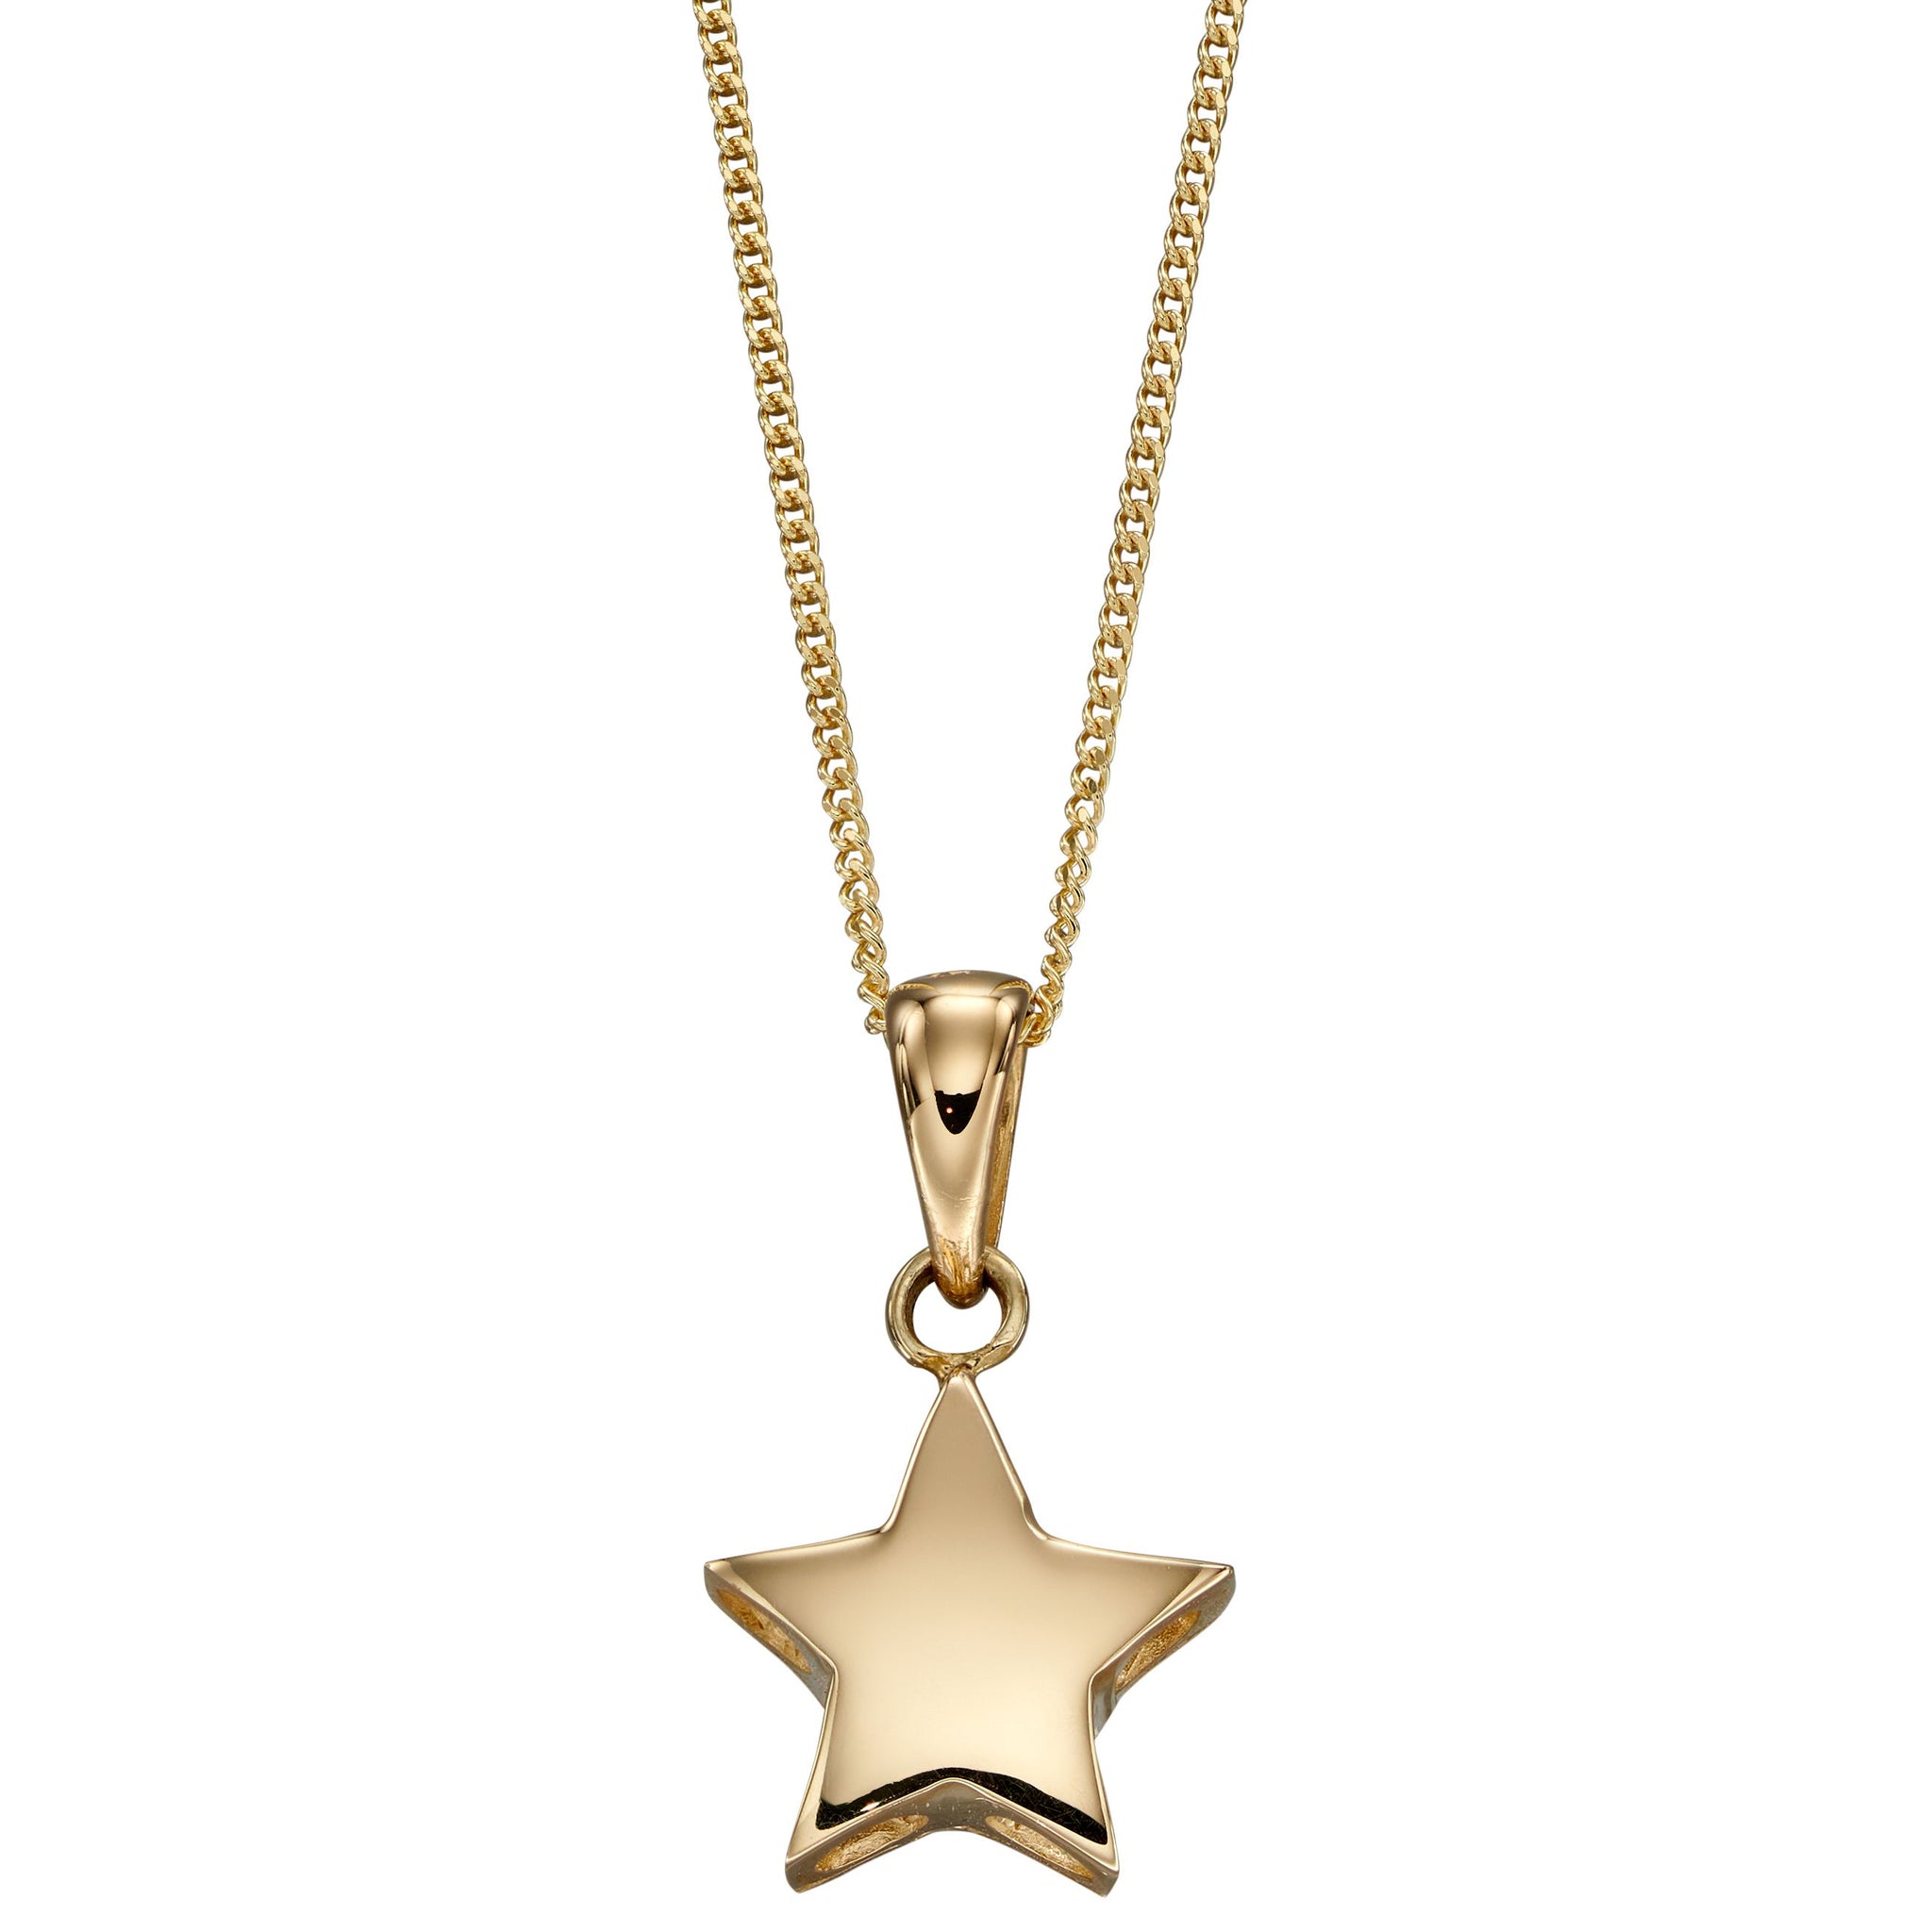 9ct yellow gold star pendant